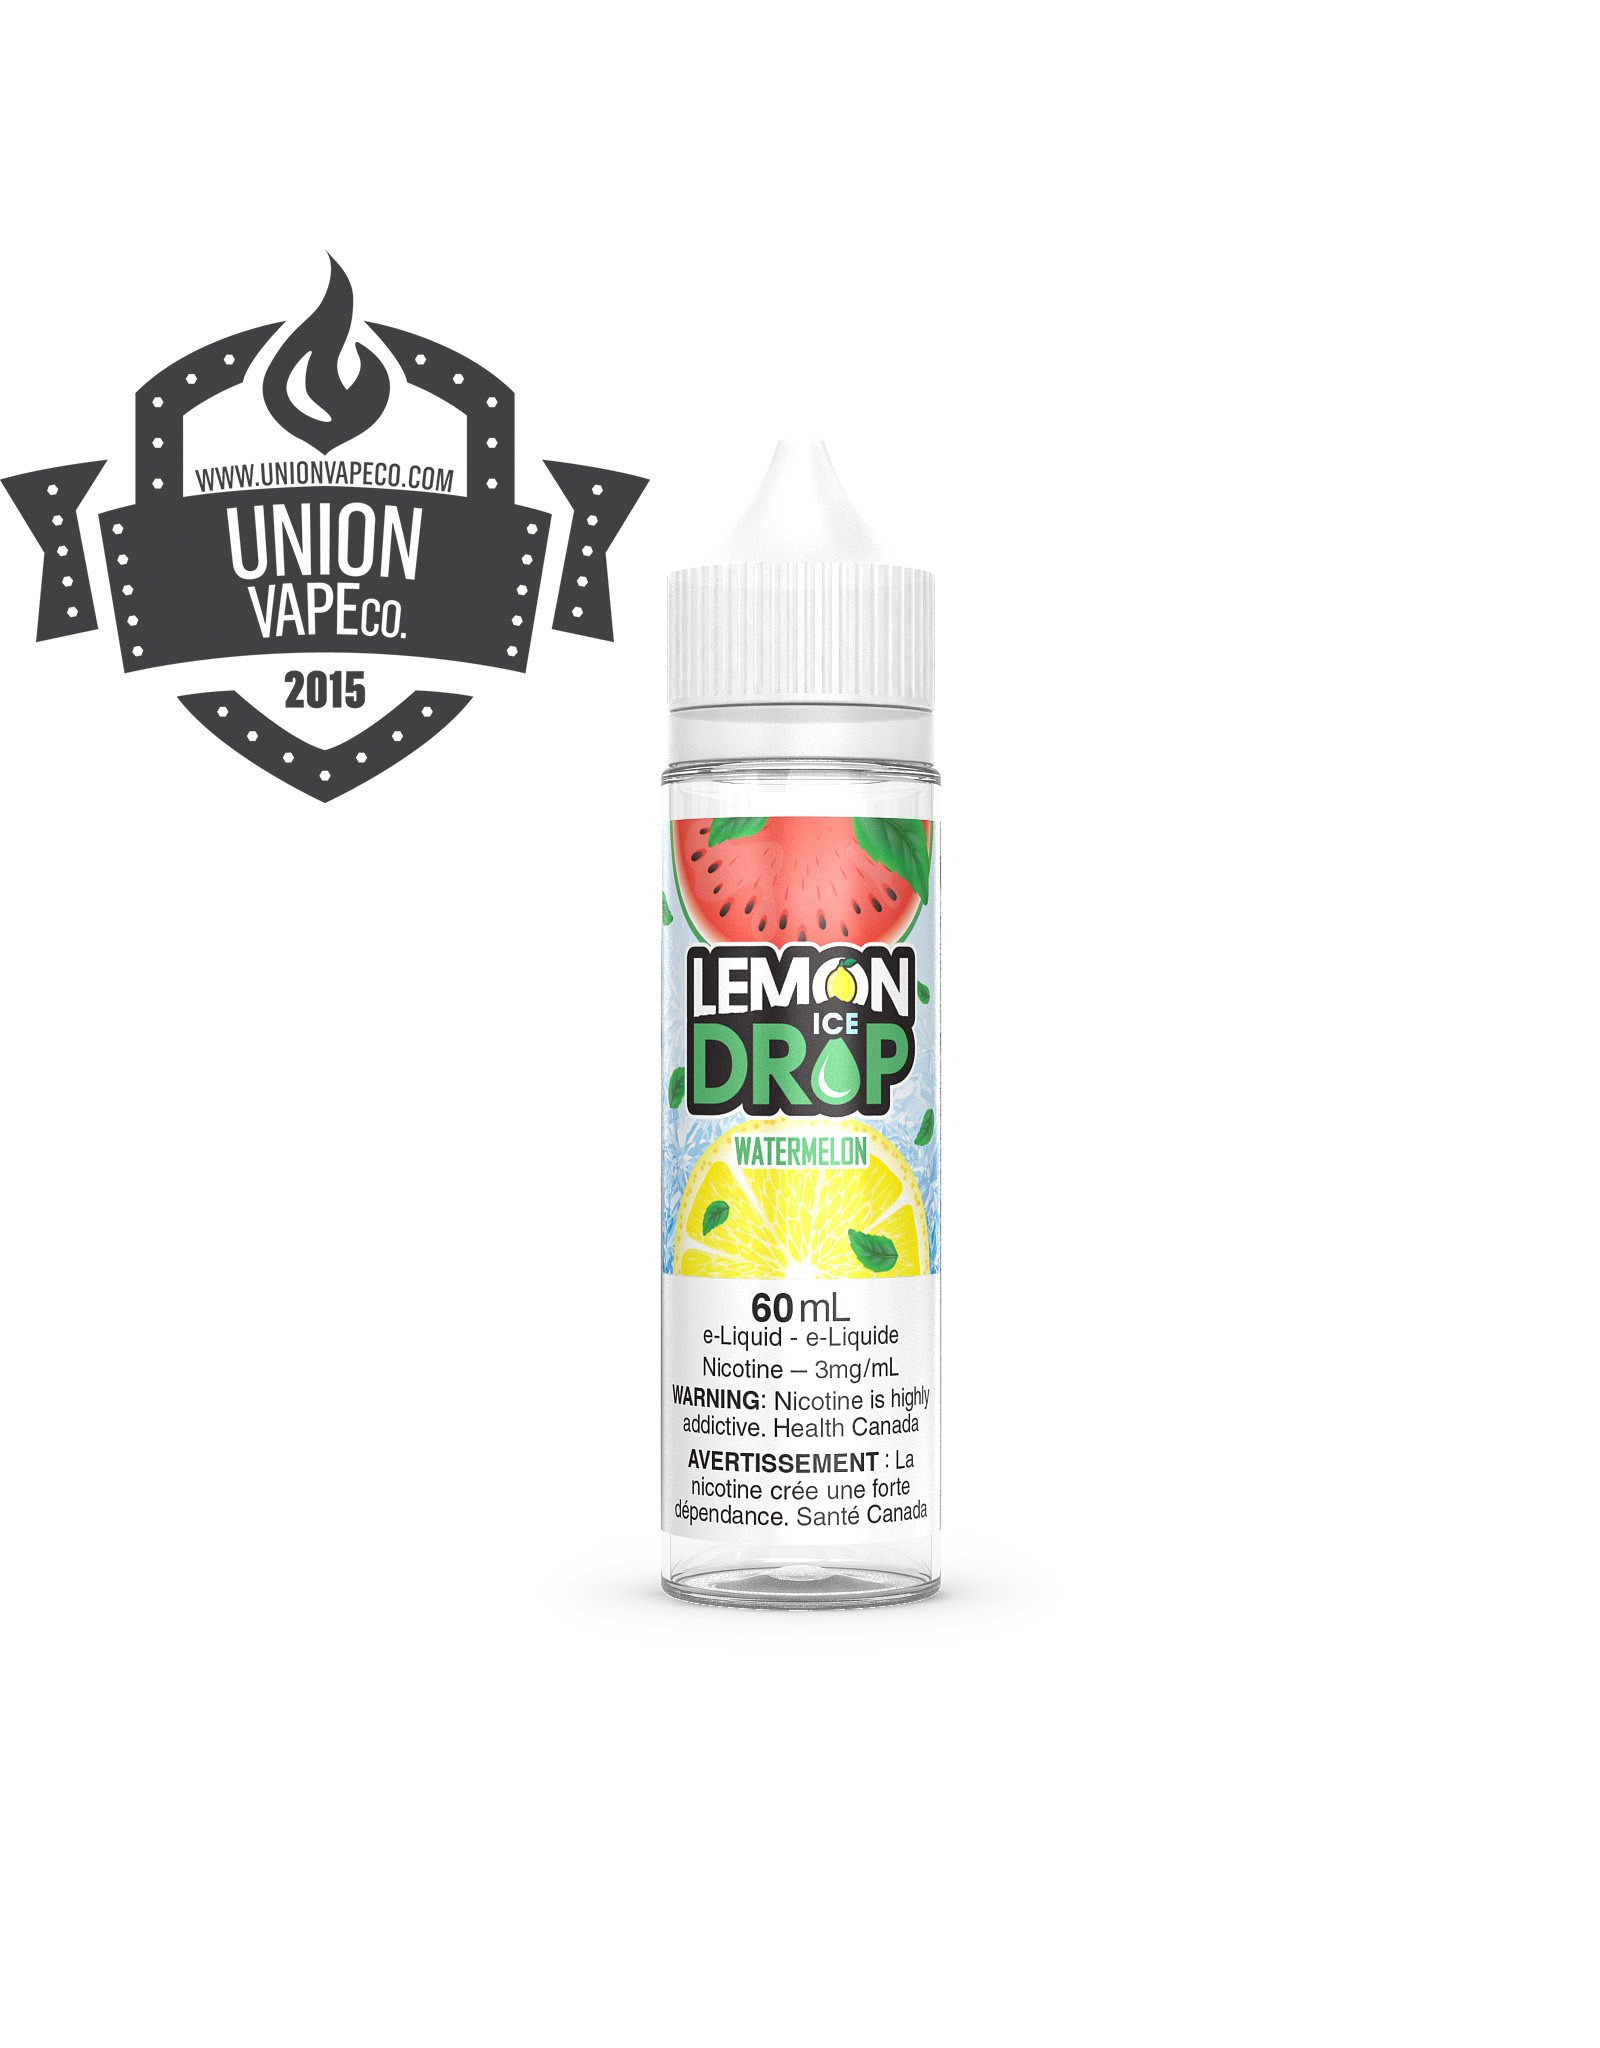 Lemon Drop Lemon Drop Ice - Watermelon Lemonade Ice (60ml)